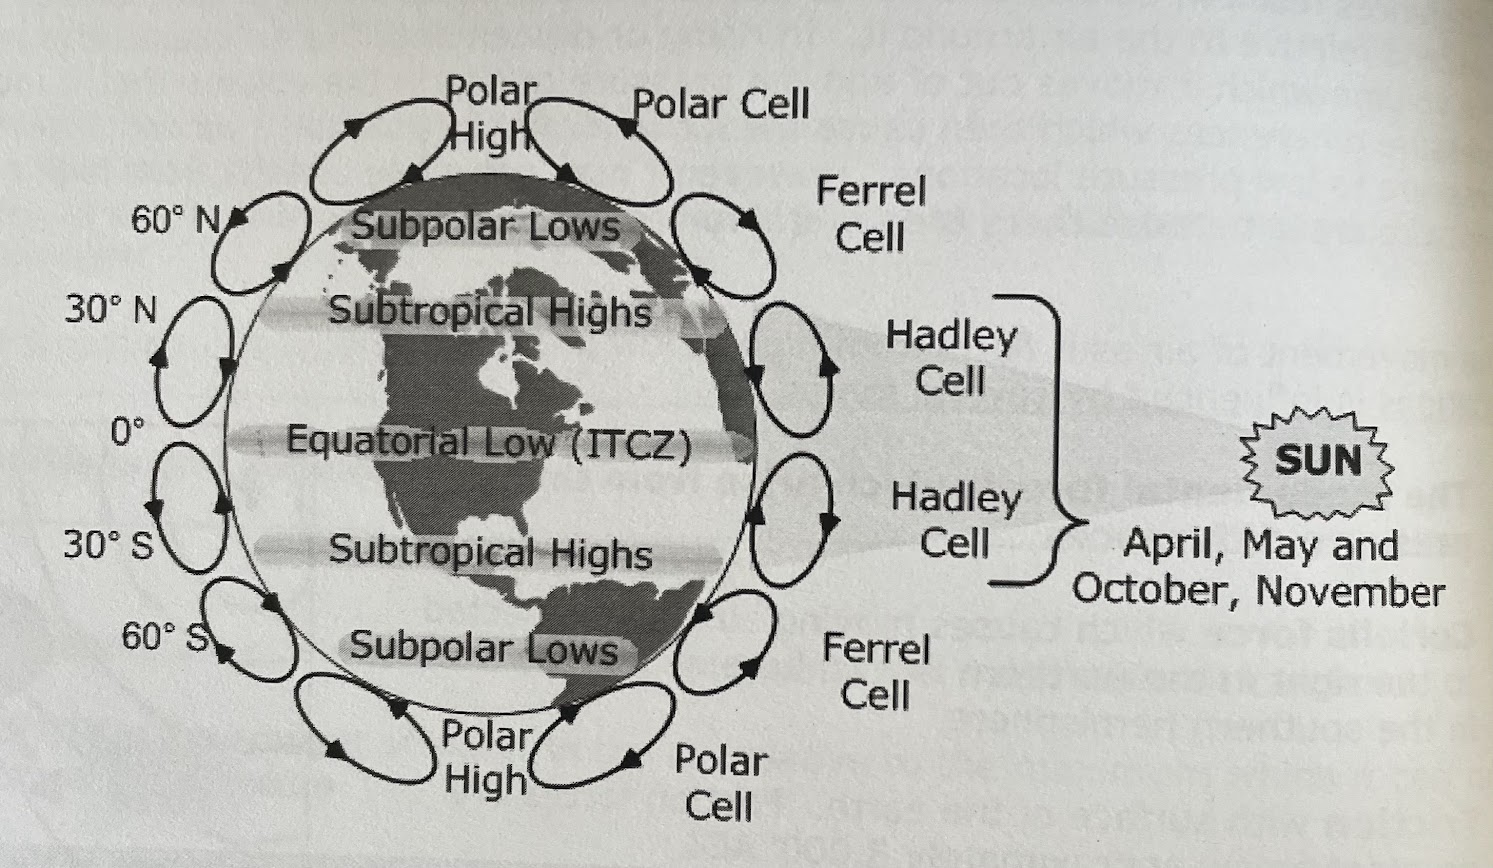 <ol><li><p>polar cell</p></li><li><p>hadley cell</p></li><li><p>ferrel cell</p></li></ol>